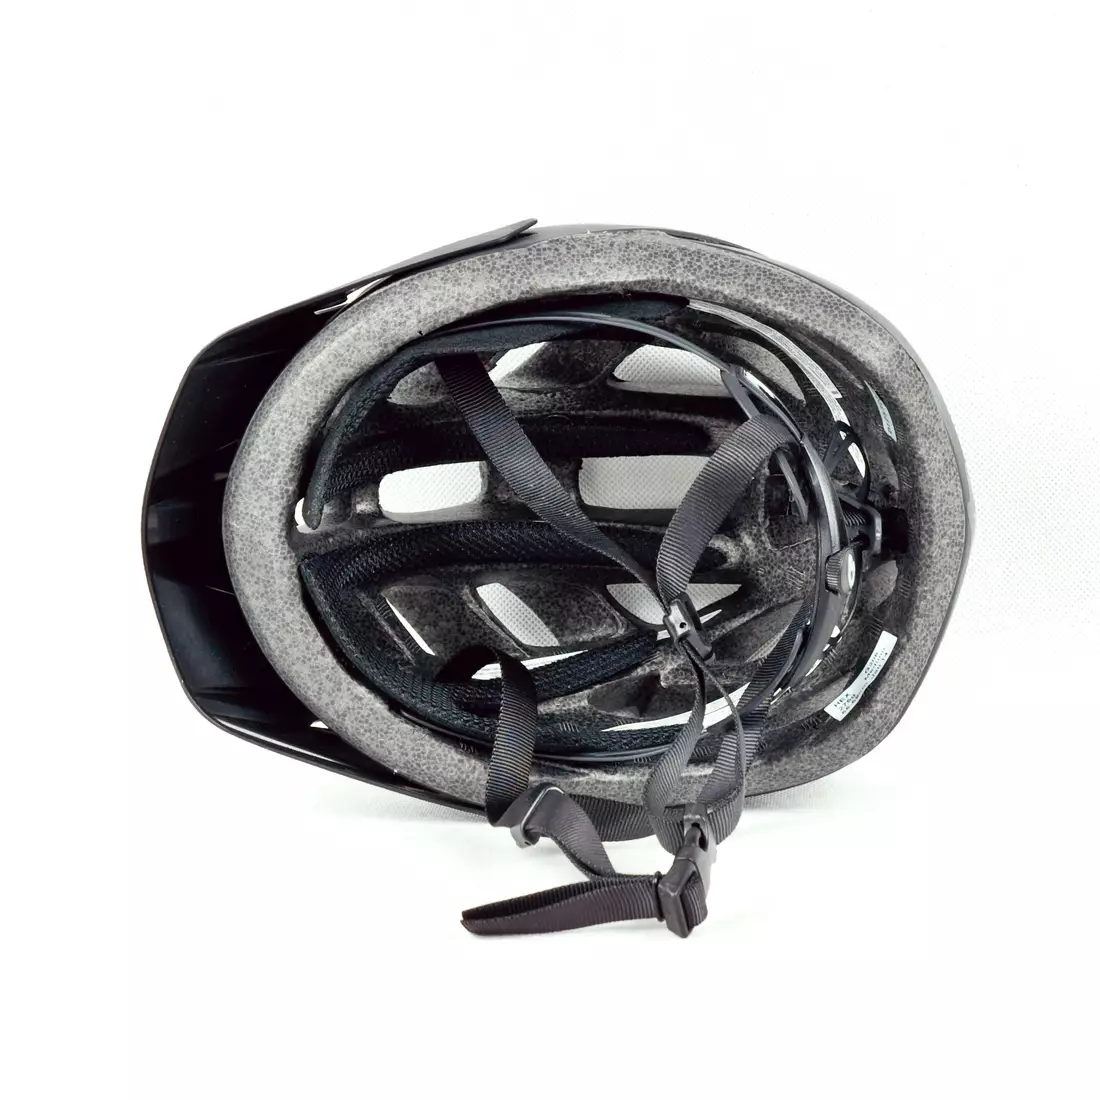 GIRO HEX - kerékpáros sisak, matt fekete